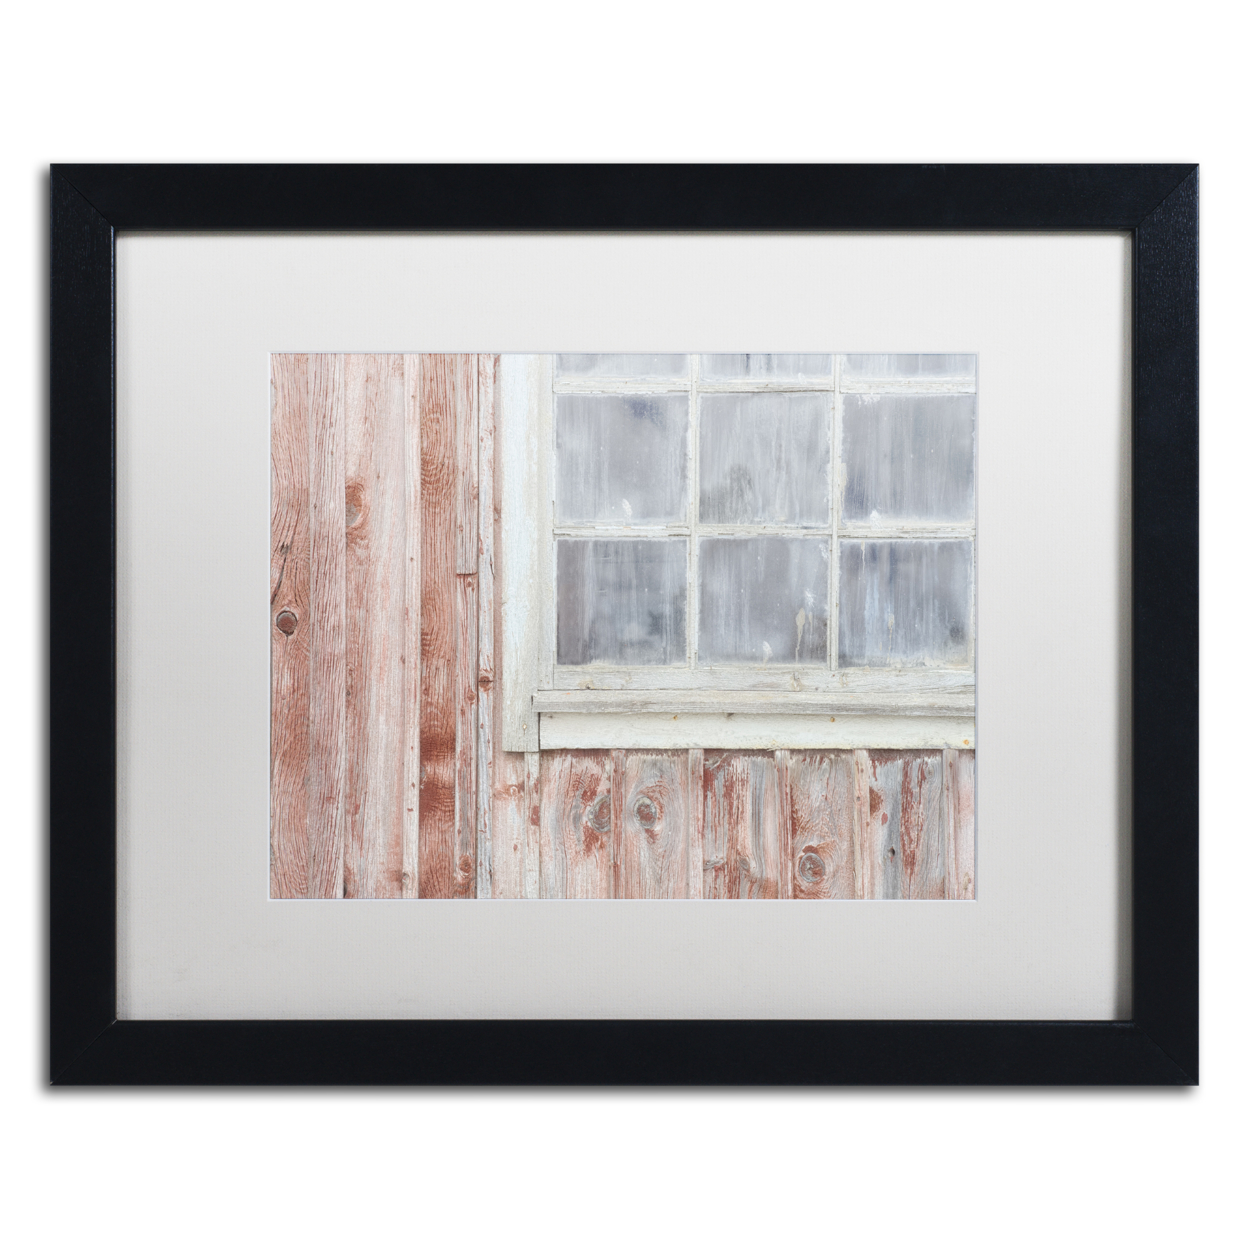 Cora Niele 'Little Windows I' Black Wooden Framed Art 18 X 22 Inches